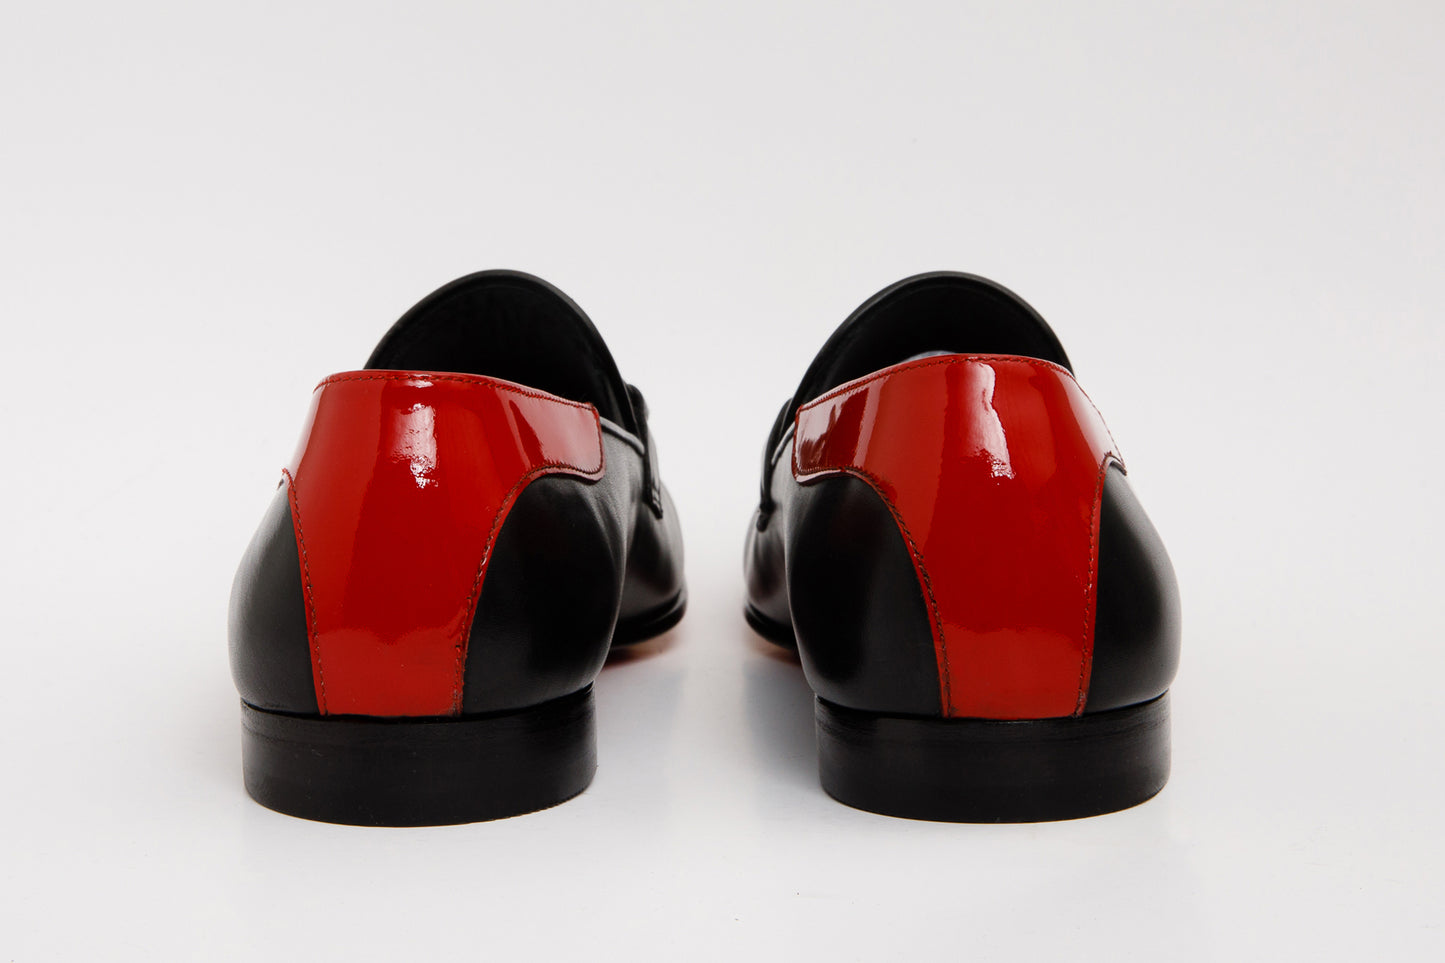 The Maratea Black Leather shoe Bit Loafer Men  Shoe